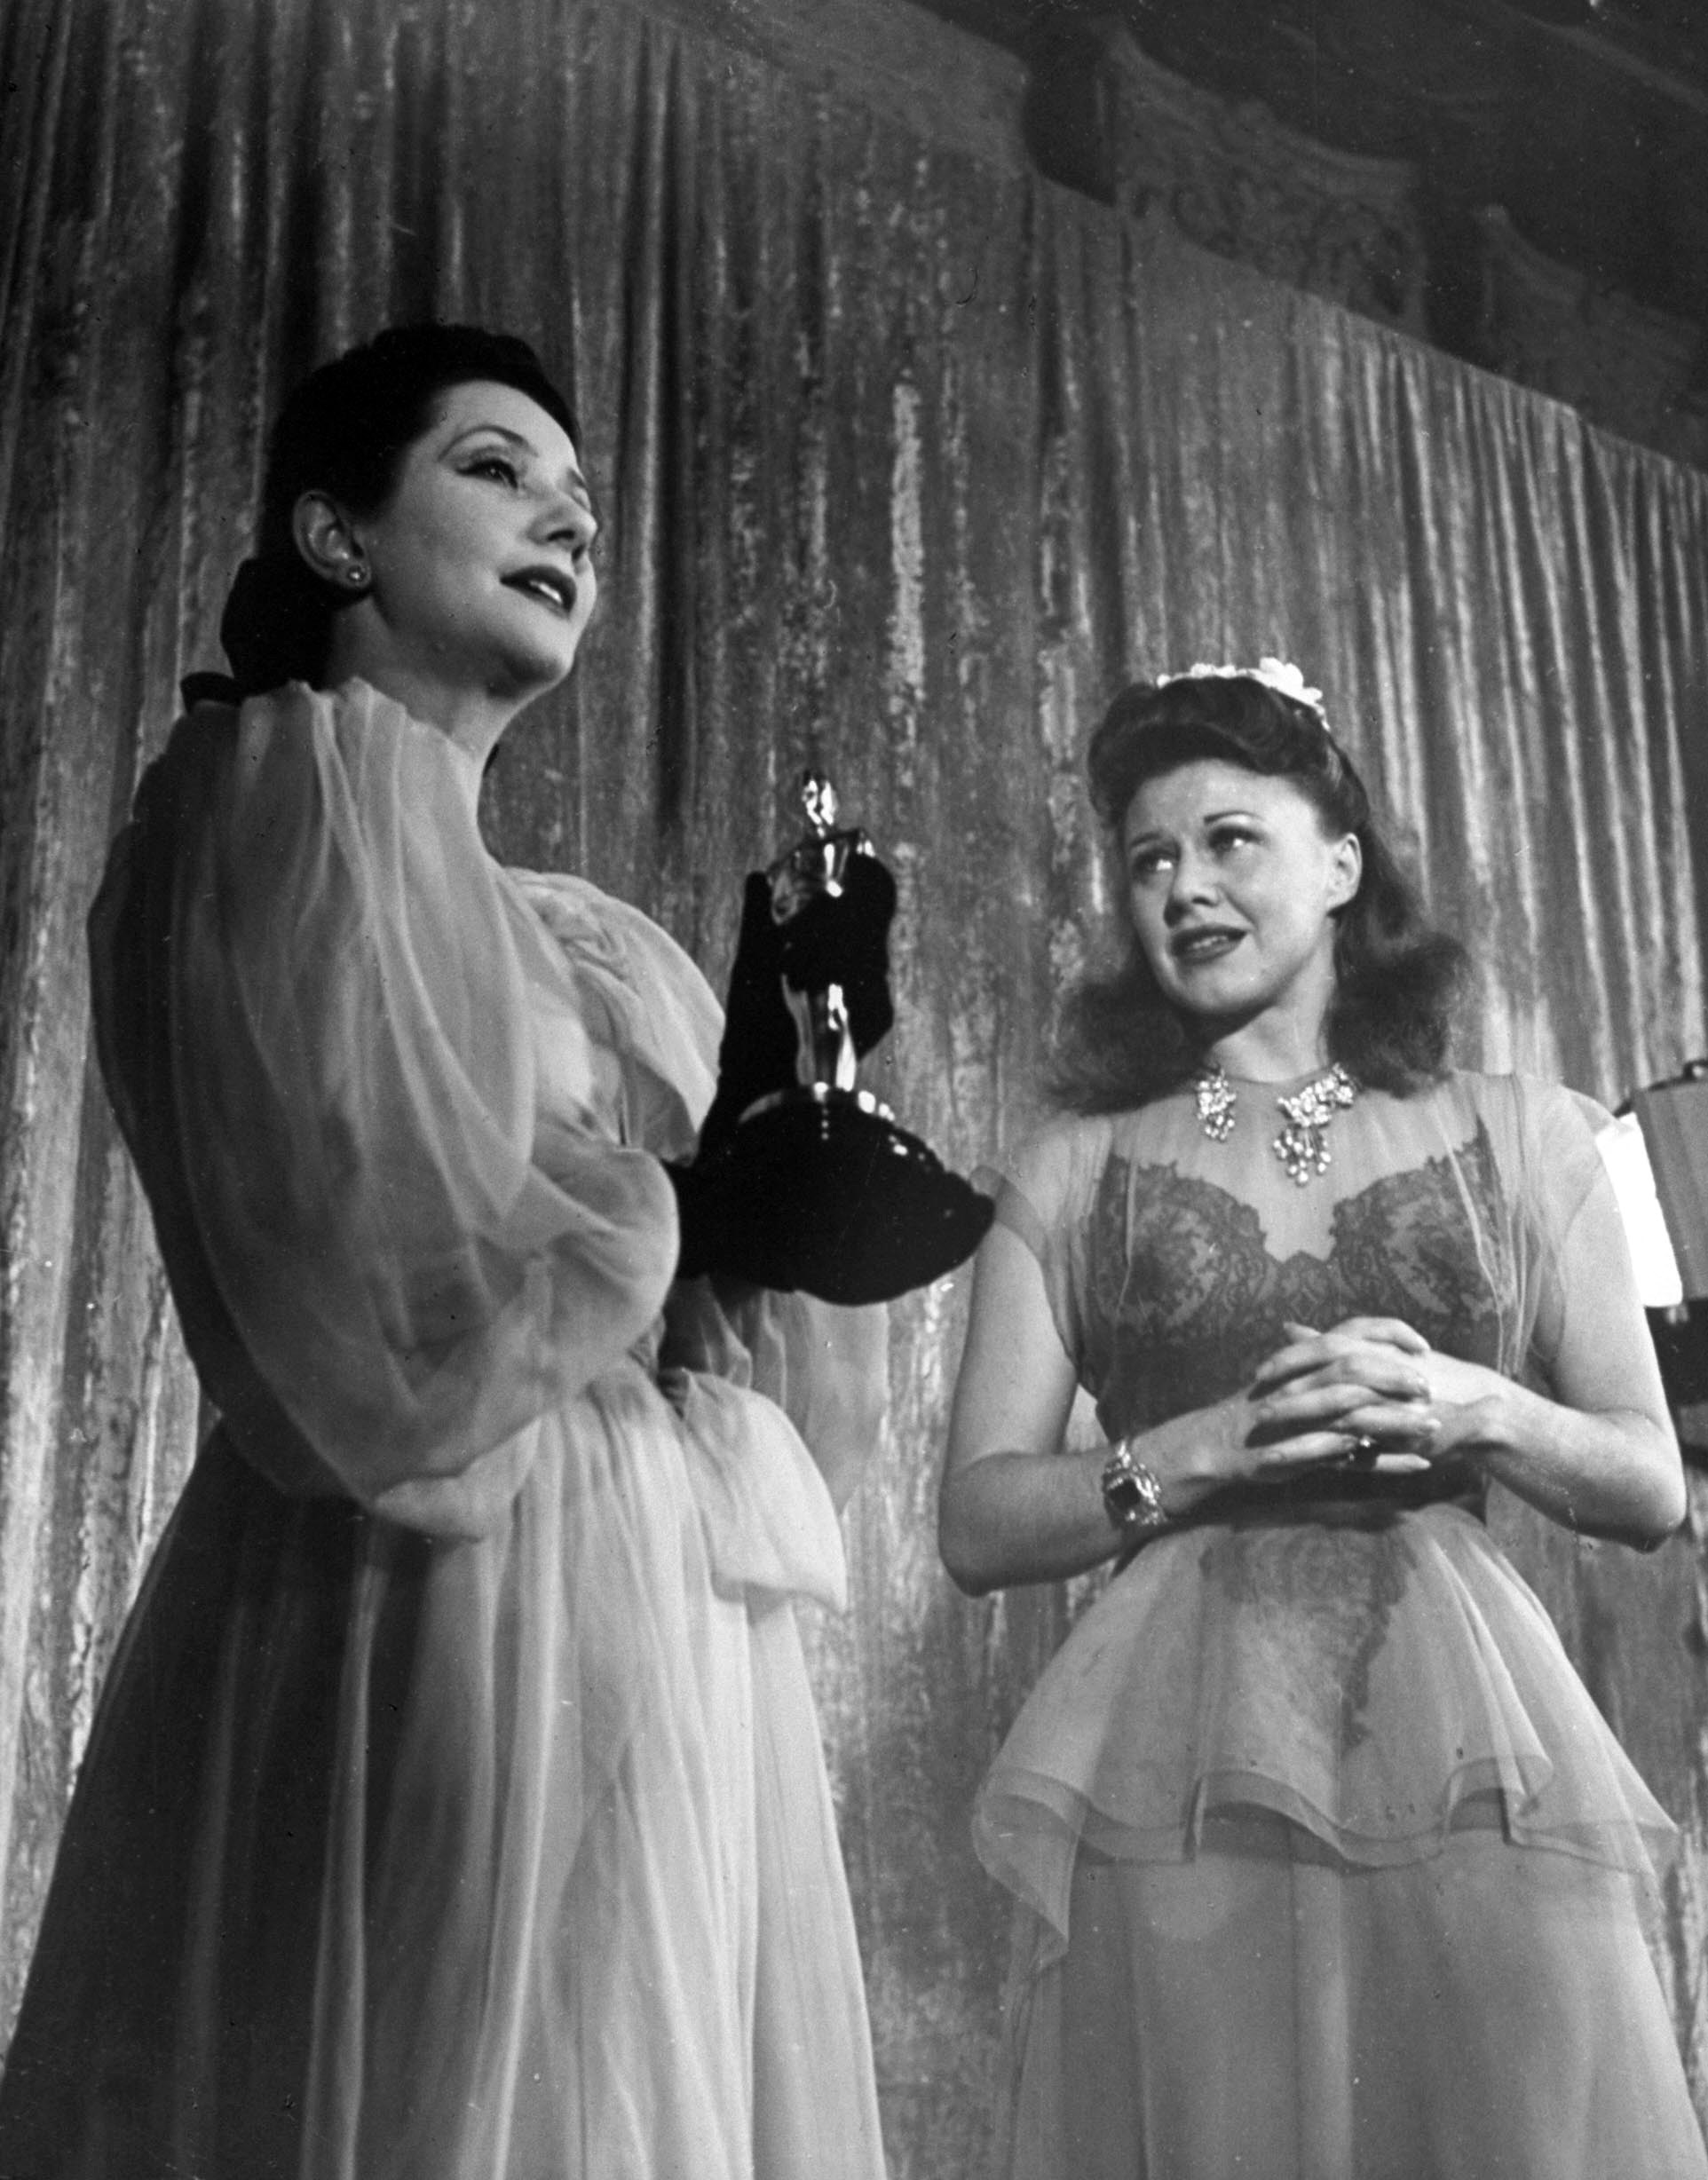 Ginger Rogers receiving an Oscar at Academy Awards presentation, 1941.